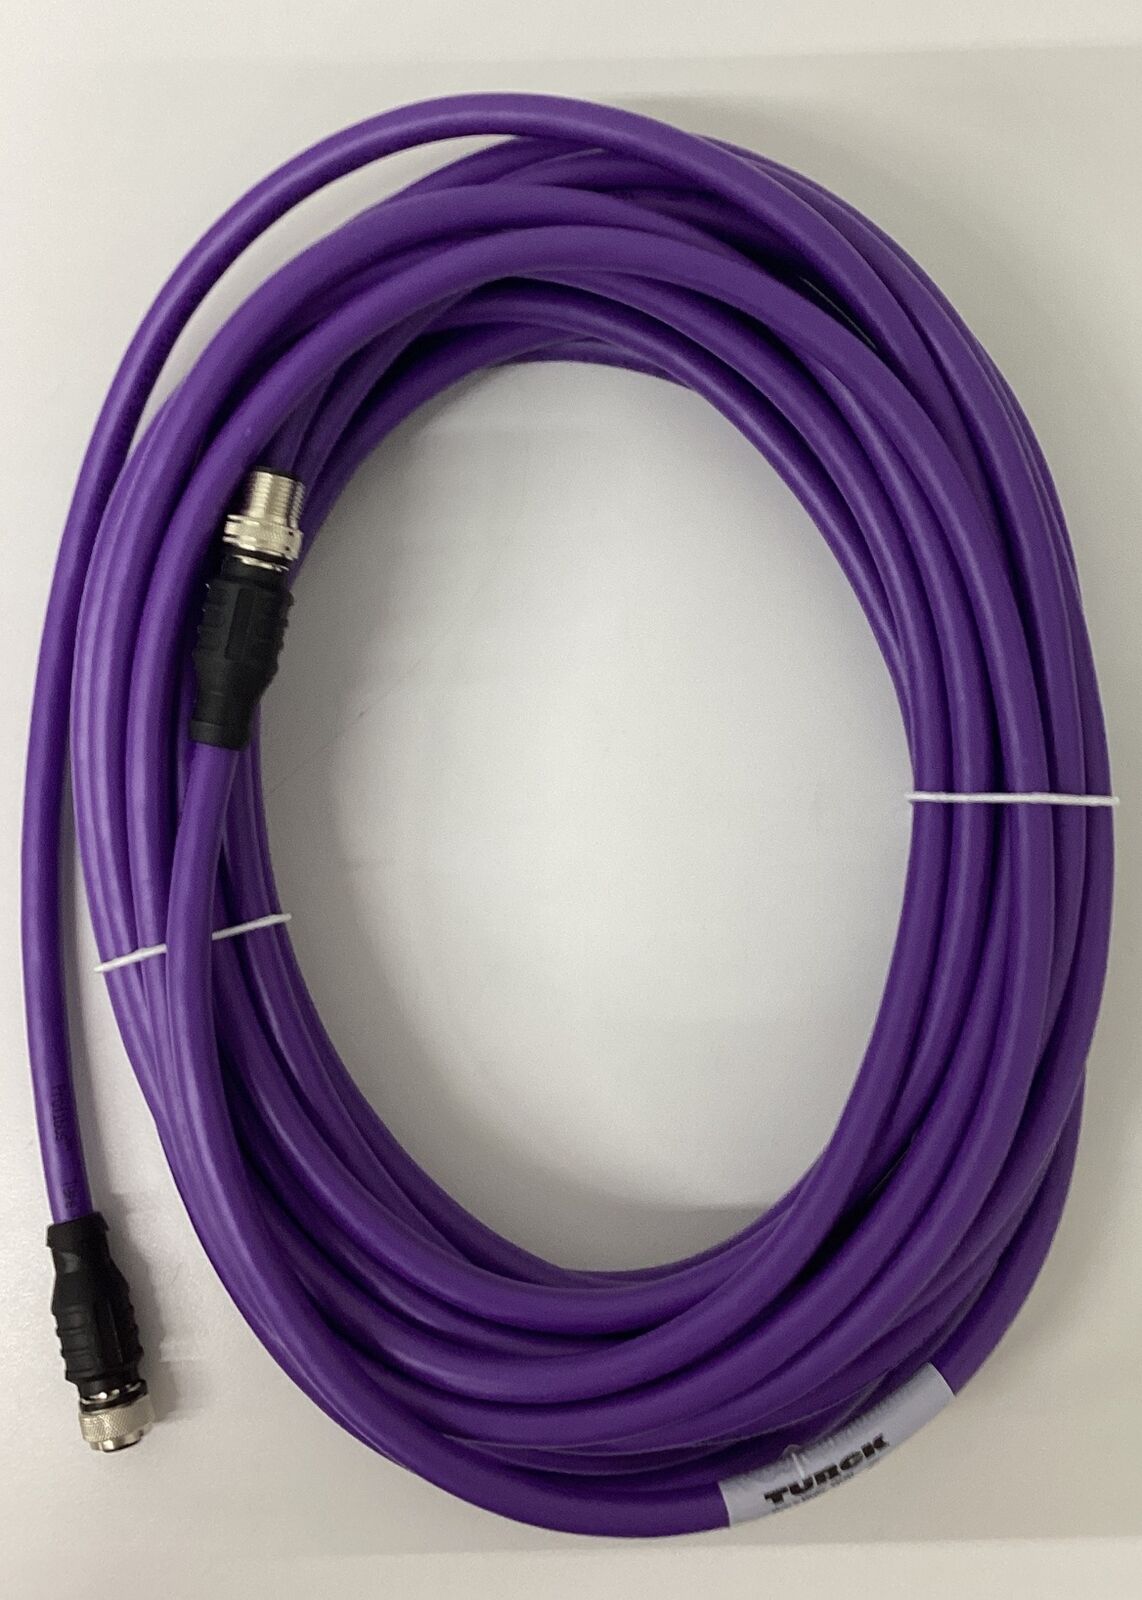 Turck Rssw-Rksw-455-12M  U0371-13 Profibus Cable 5 Pin M12 (CBL150)